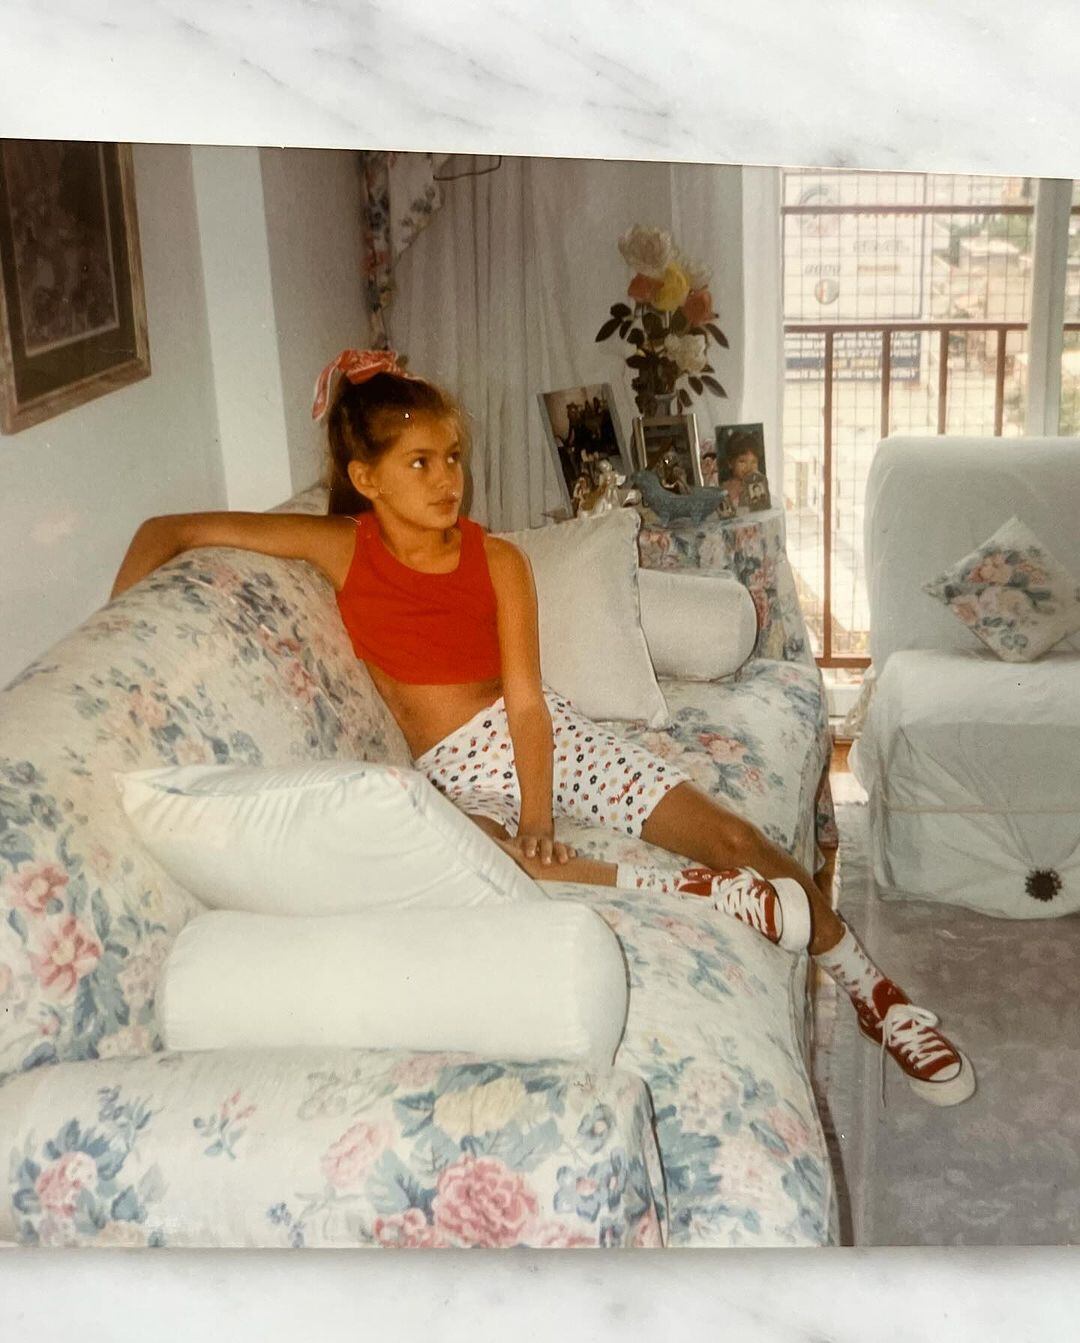 Natalie Pérez cuando era niña. Gentileza Instagram.